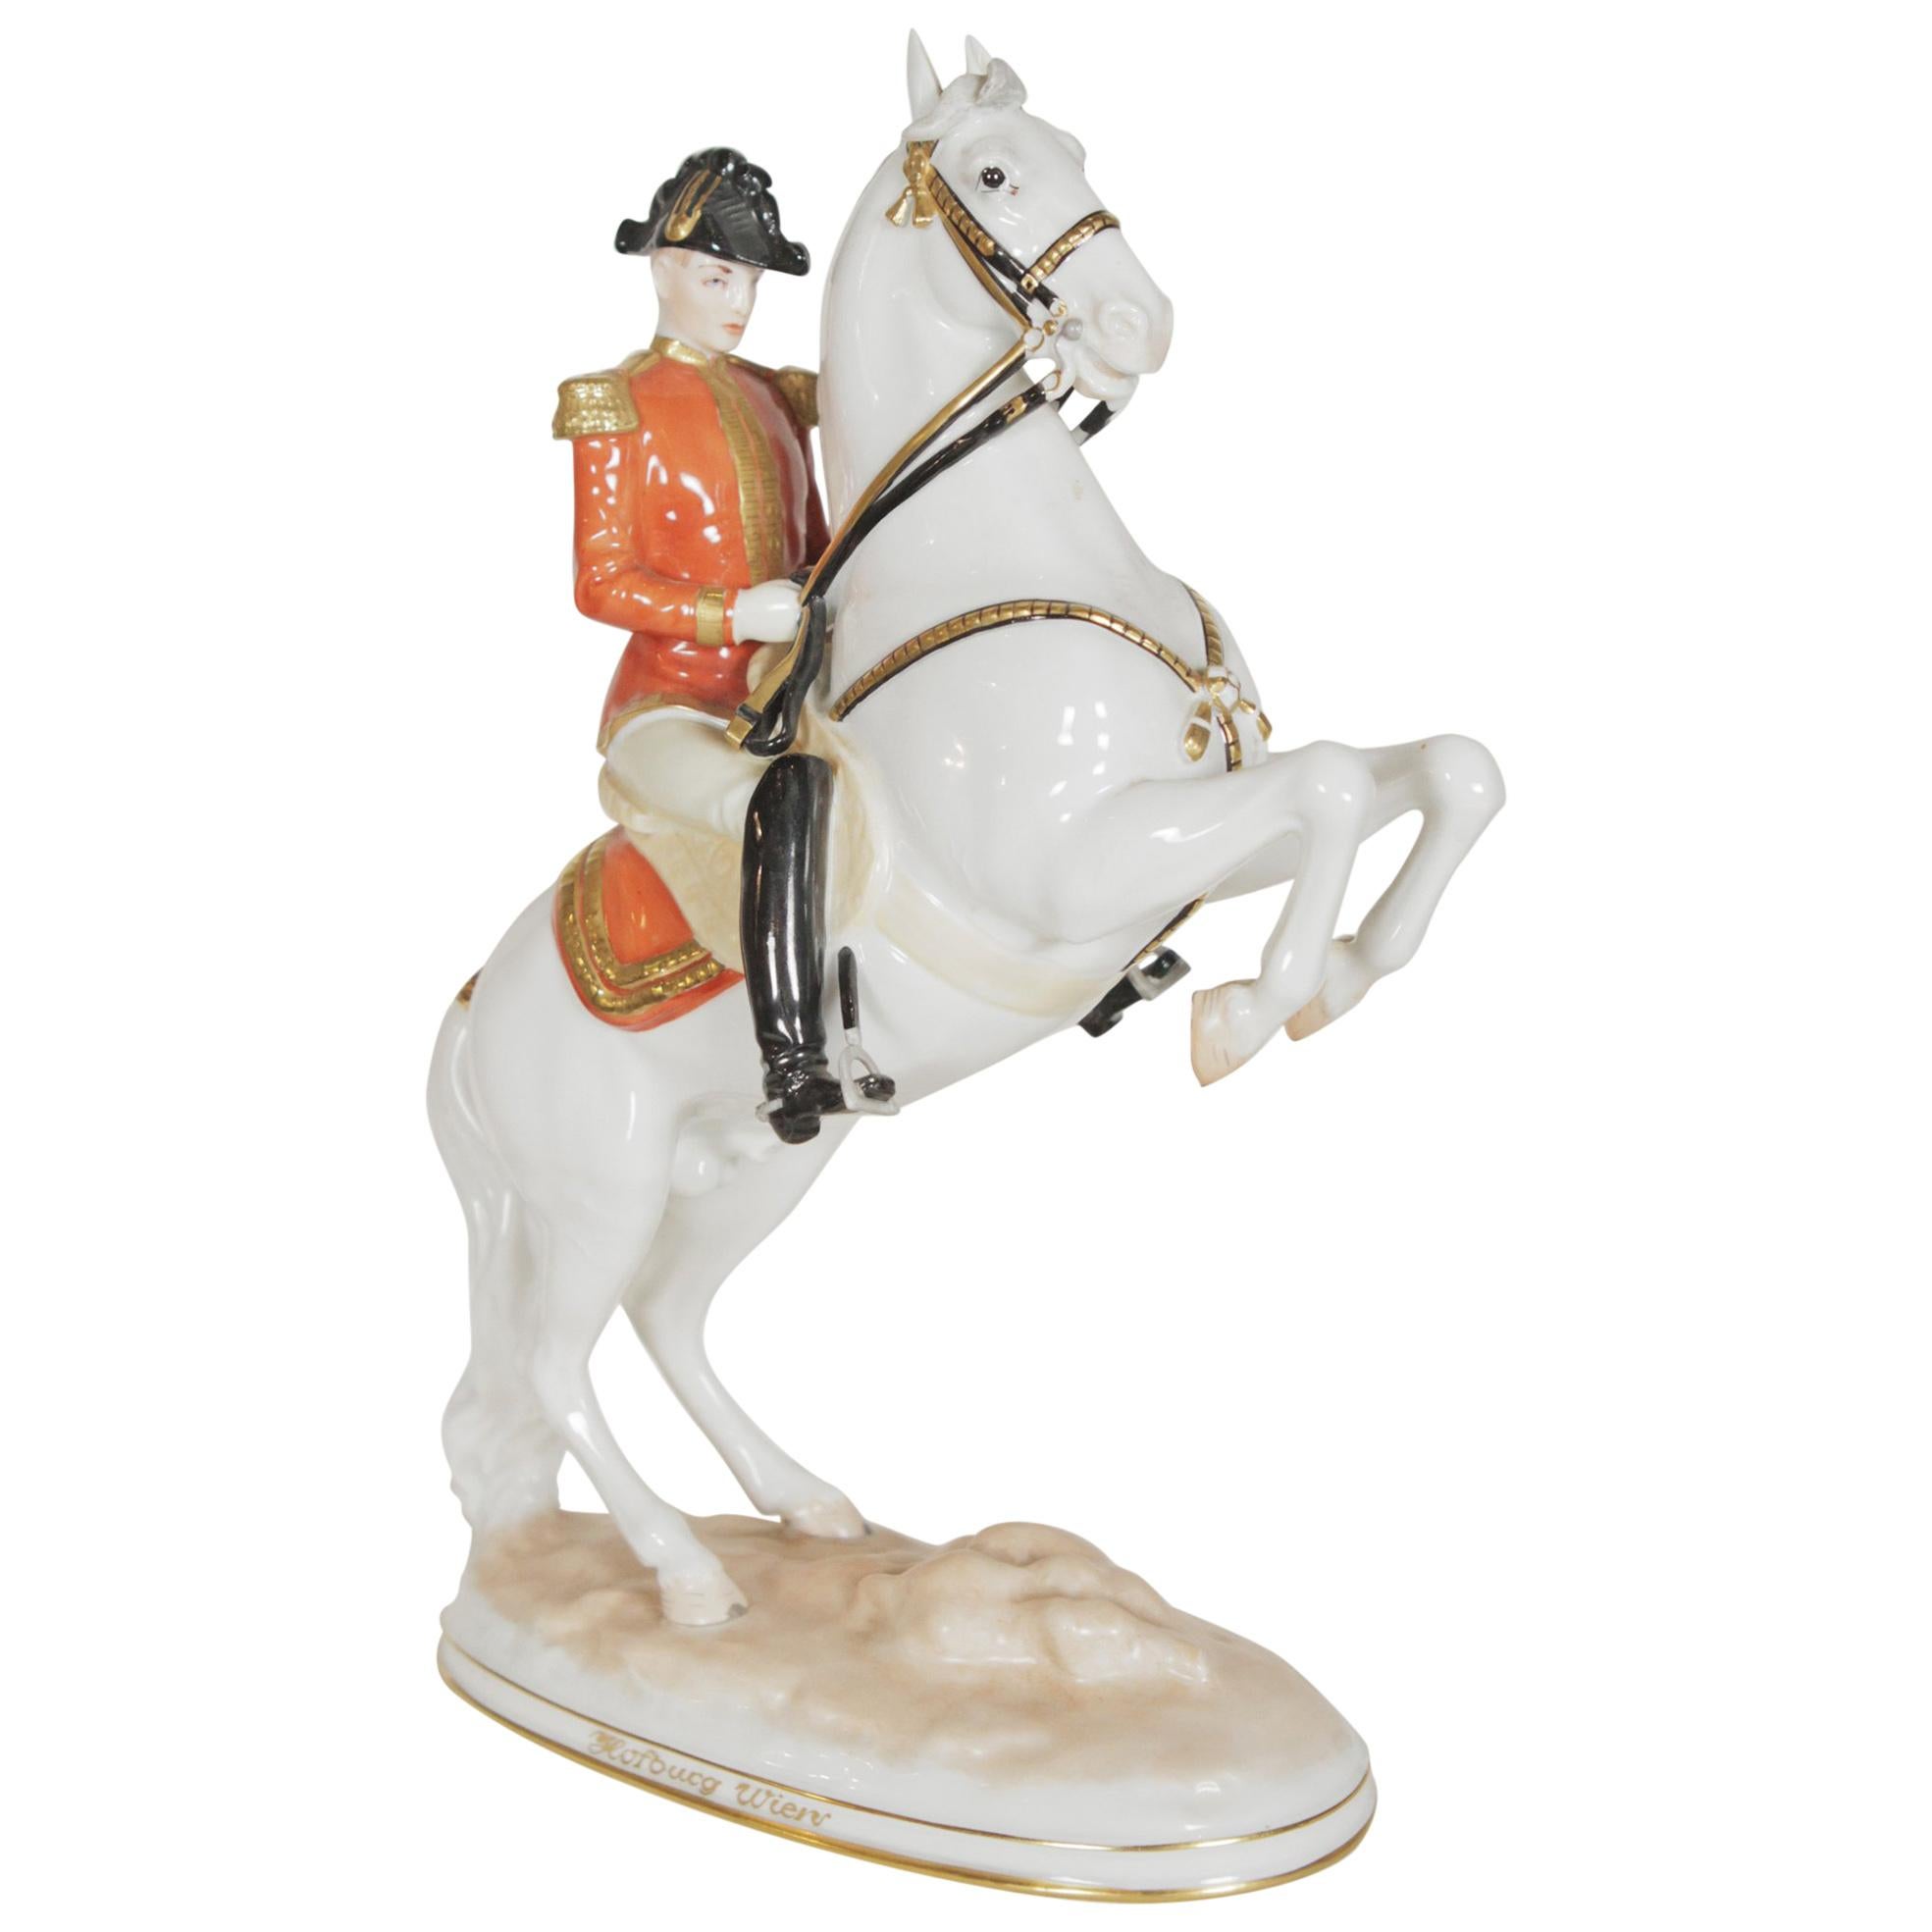 Augurten Royal Vienna Porcelain “Lipizzaner Horse Riding School Courbette” 